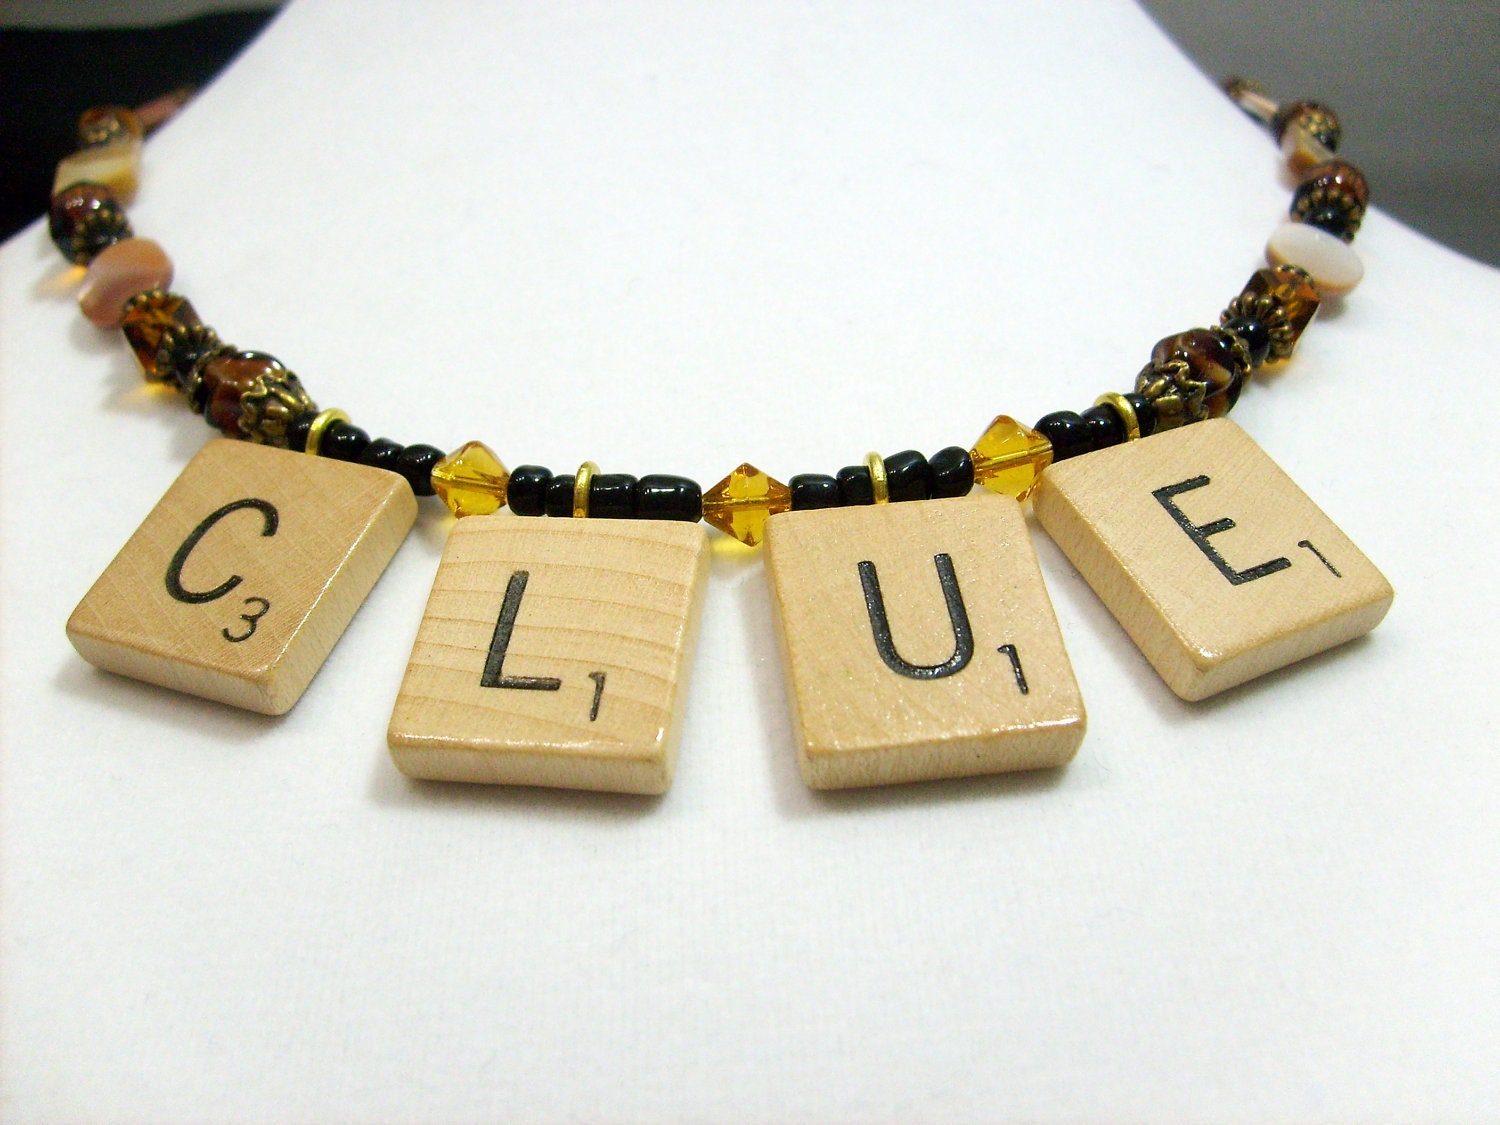 Clue necklace vintage Scrabble tile & mother of pearl